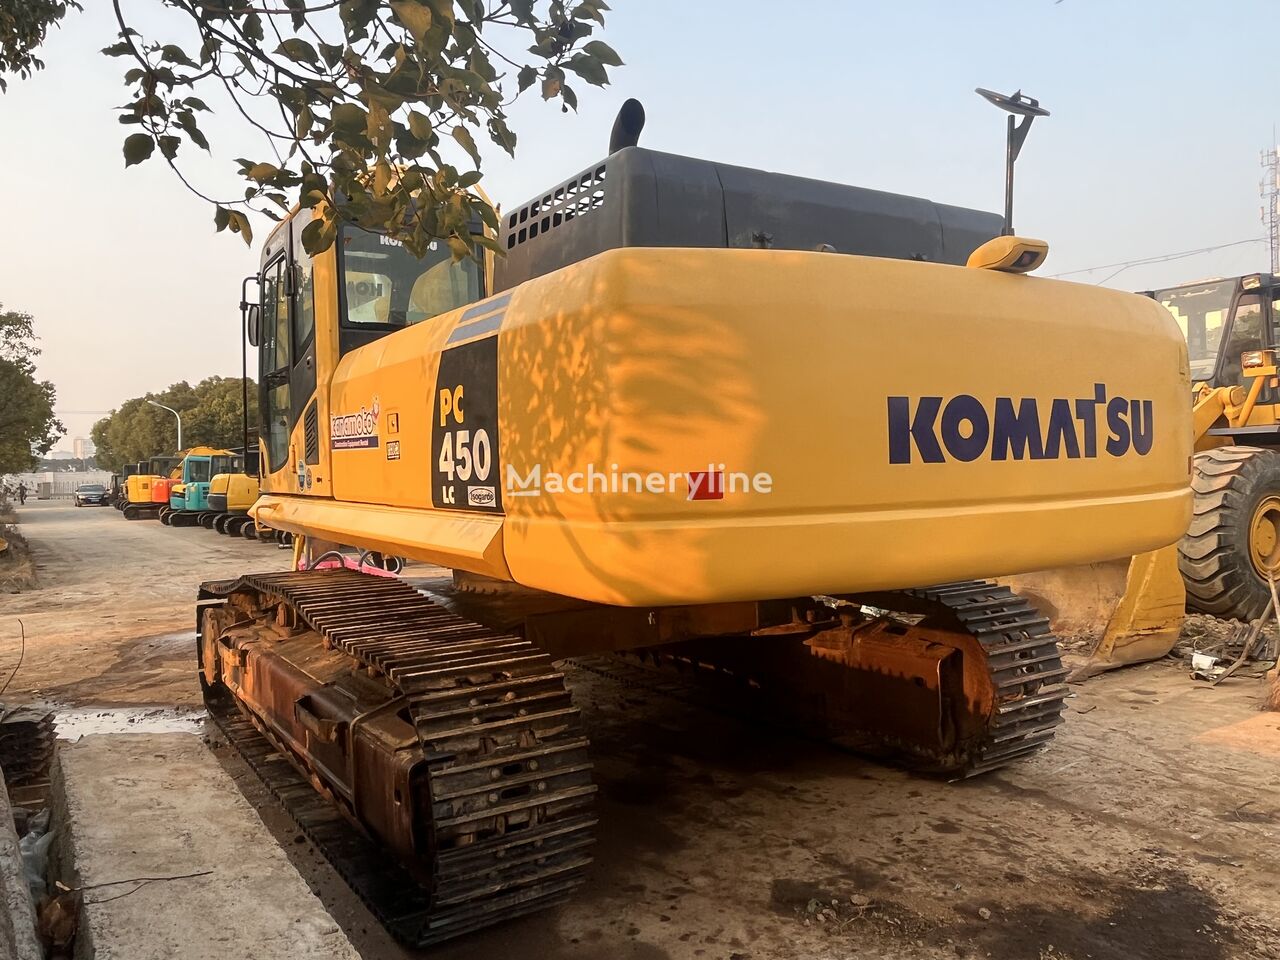 KOMATSU PC450 tracked excavator